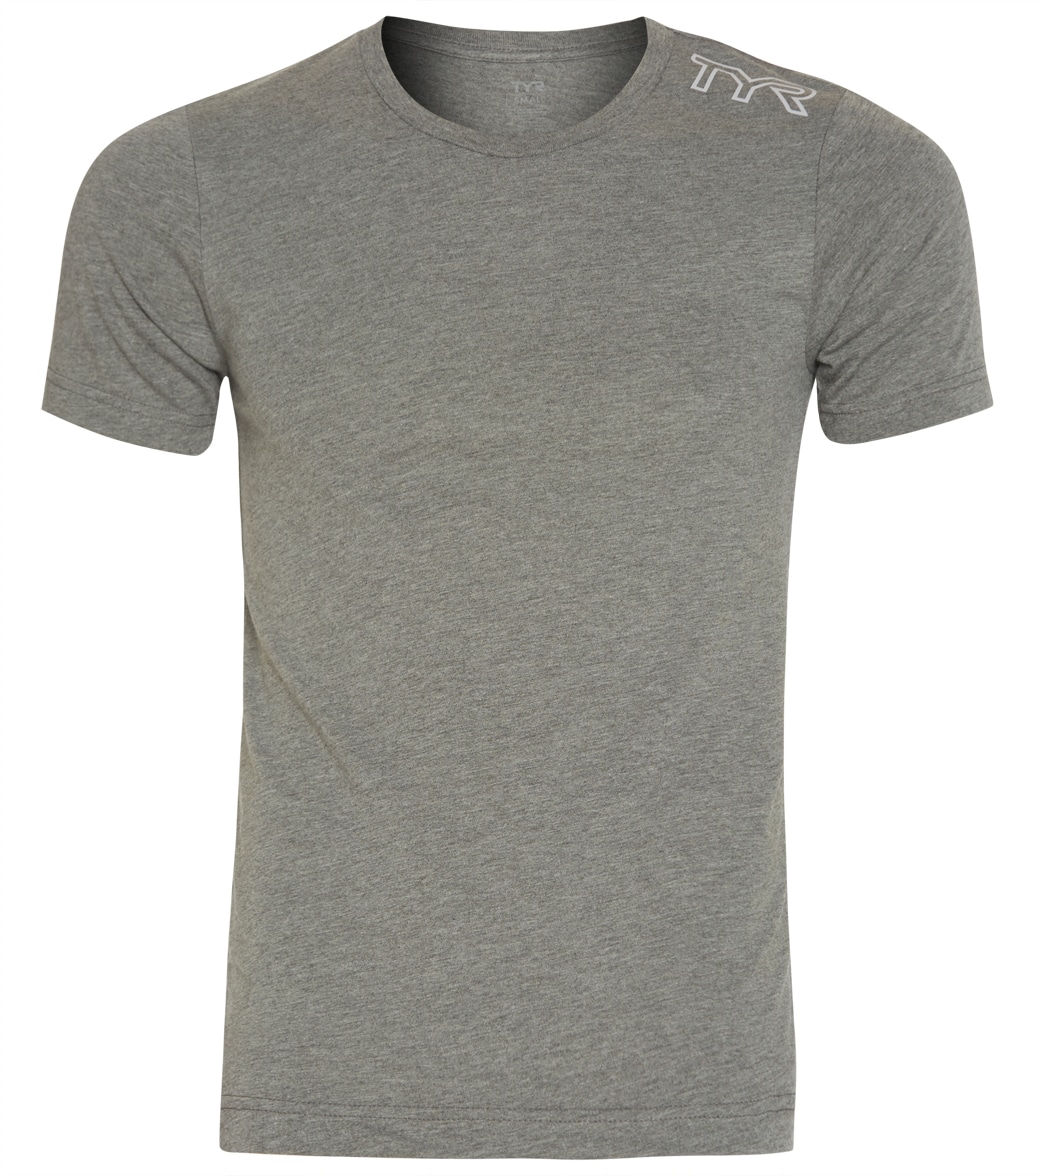 TYR Unisex Triblend Tee Shirt - Heather Grey Medium Cotton/Polyester - Swimoutlet.com